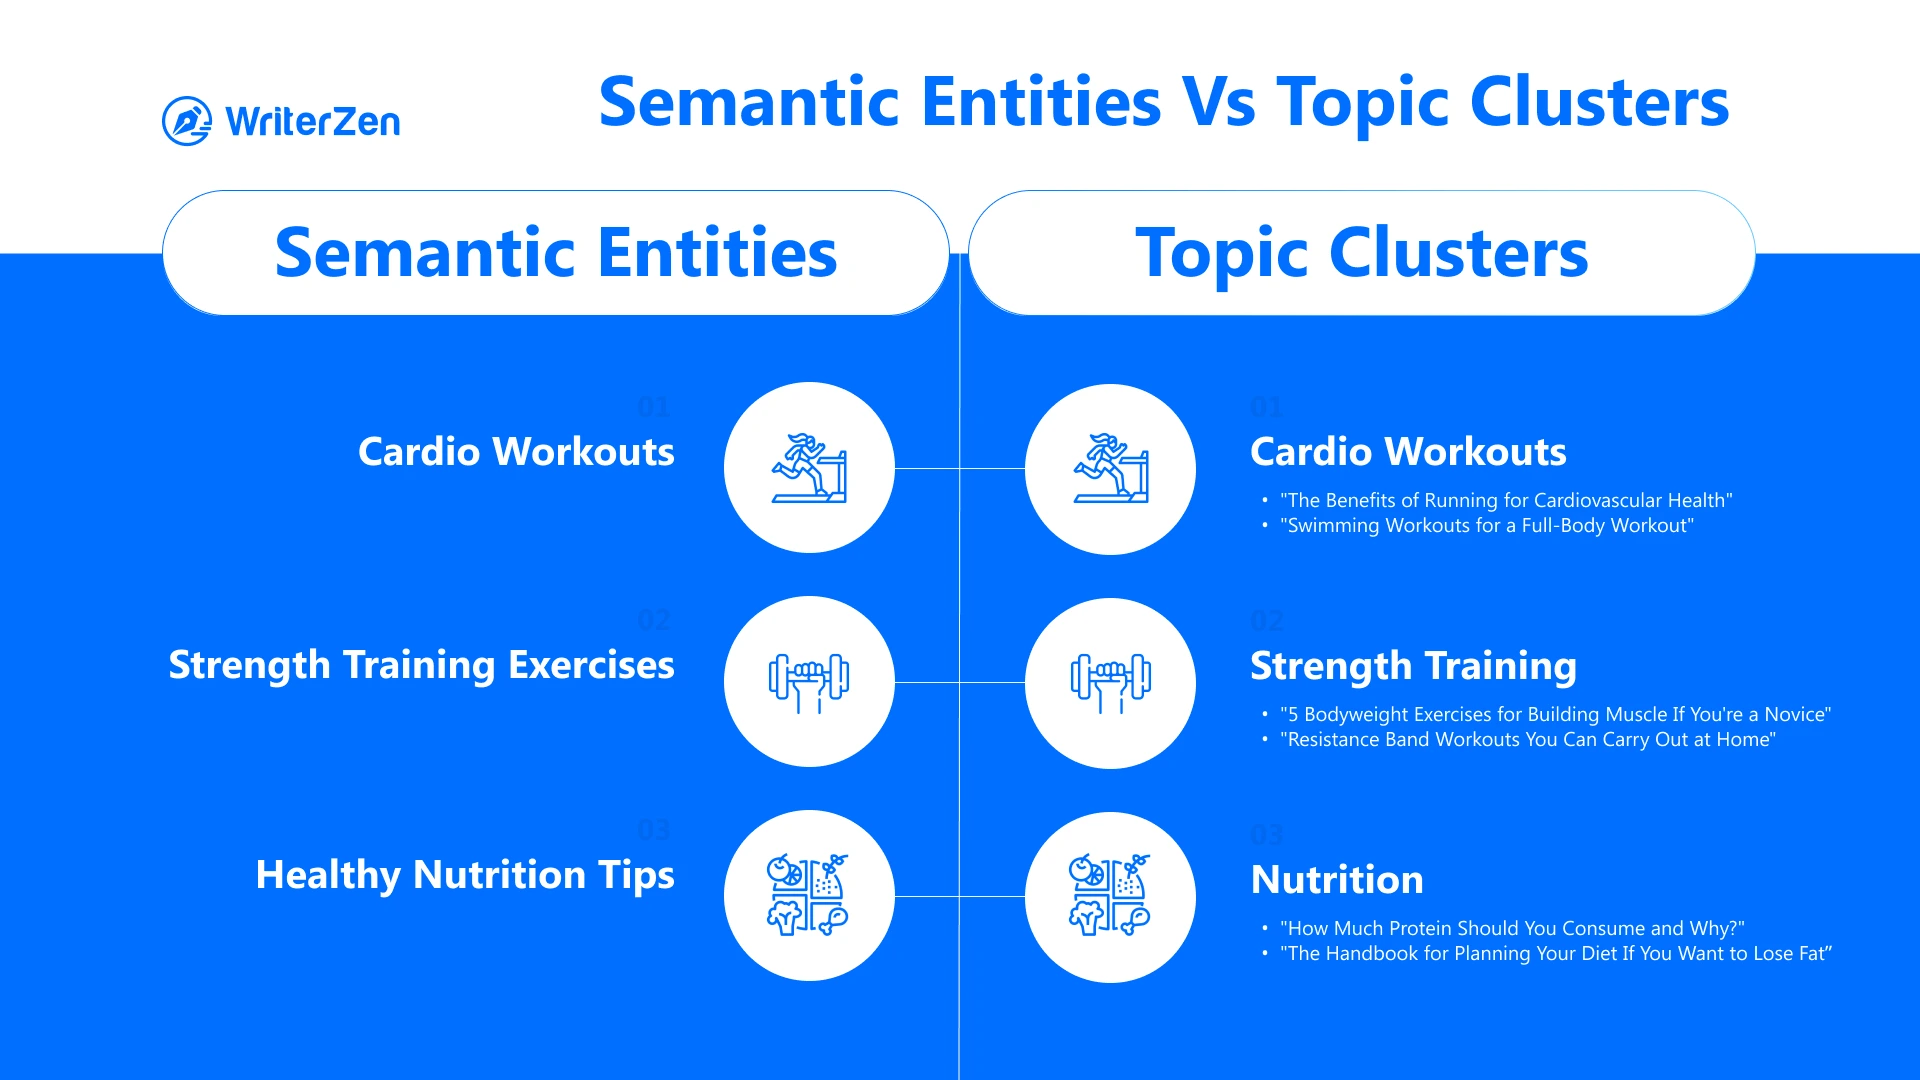 Semantic Entities vs Topic Clusters